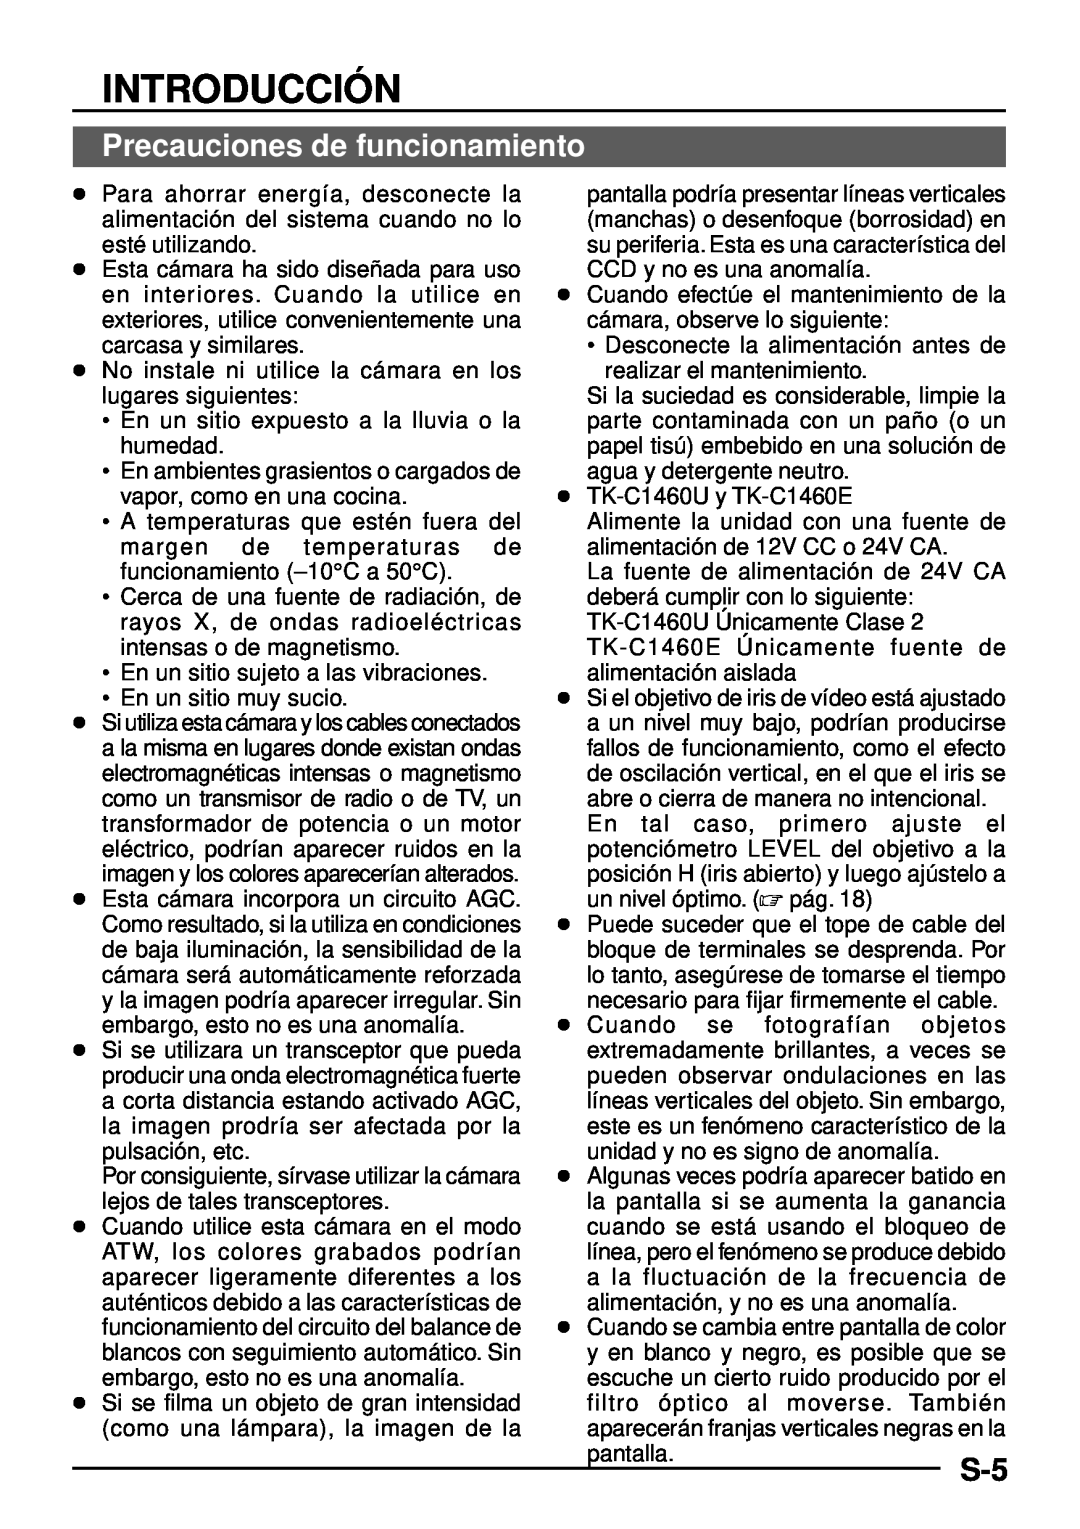 JVC TK-C1460 manual Introducció N, Precauciones de funcionamiento 